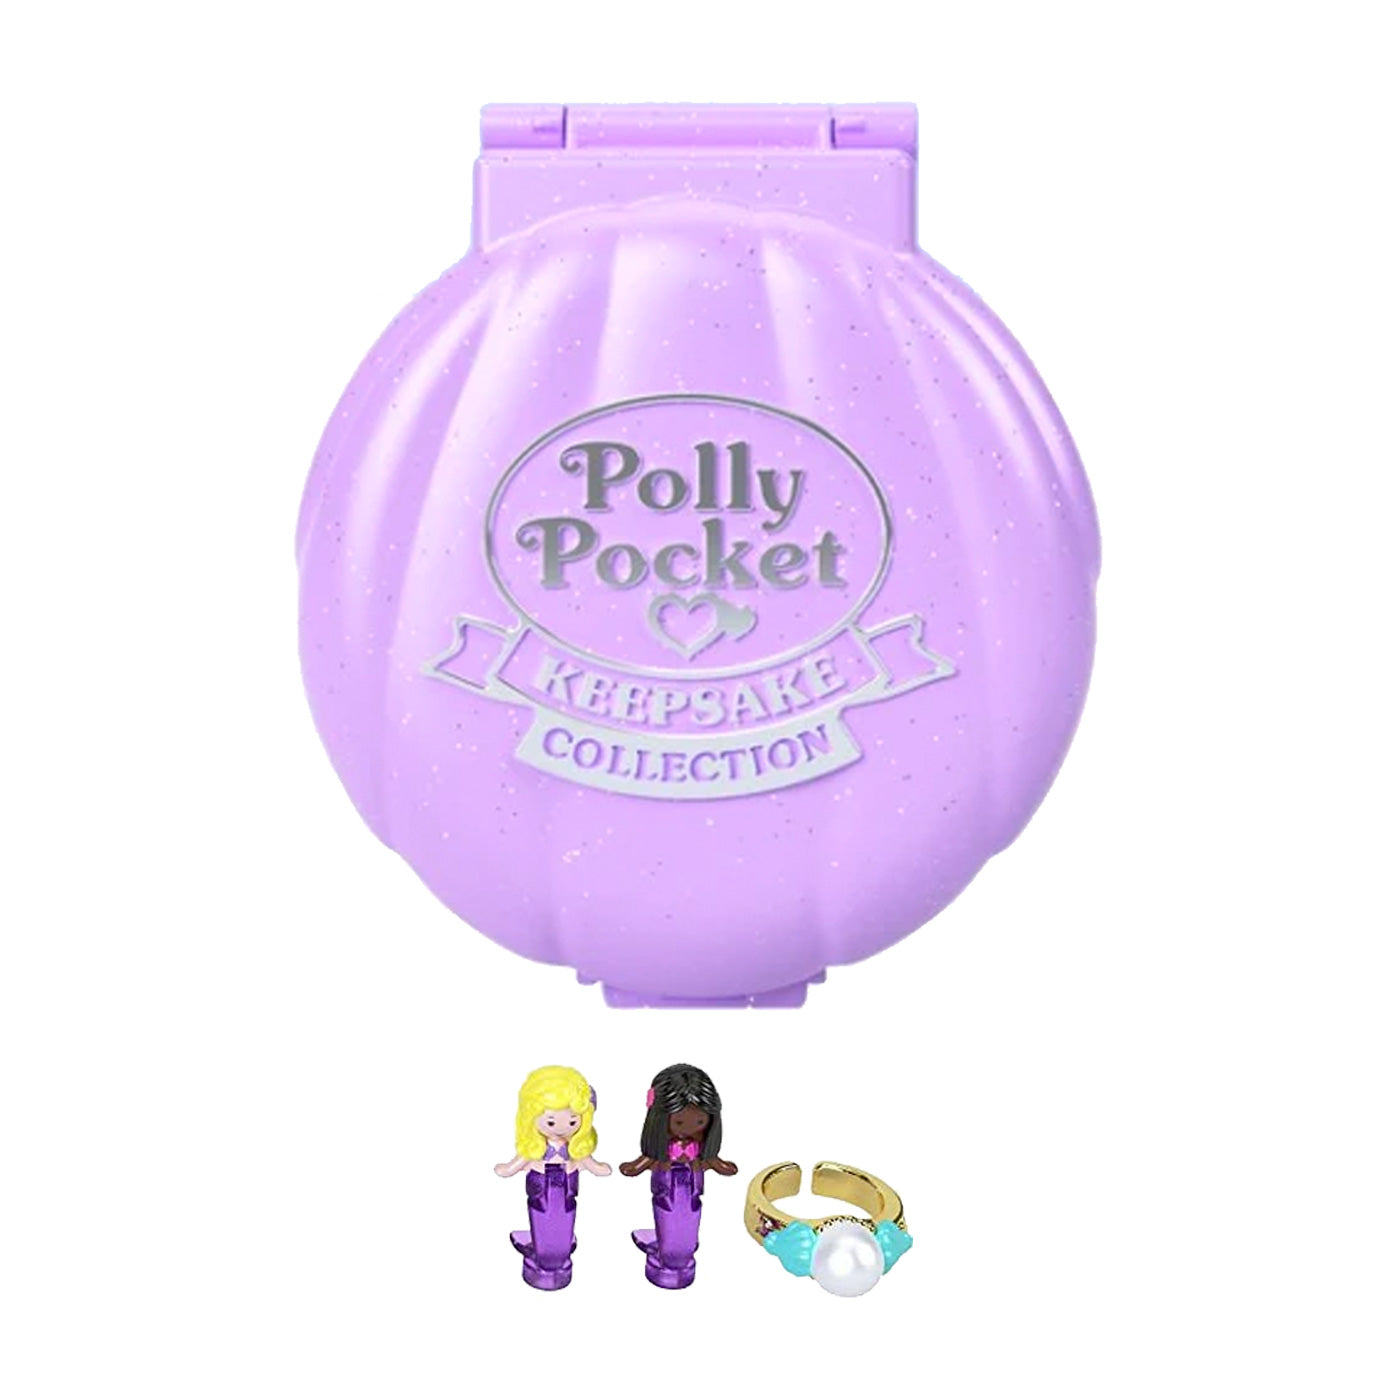 Polly Pocket Keepsake collection mermaid dreams